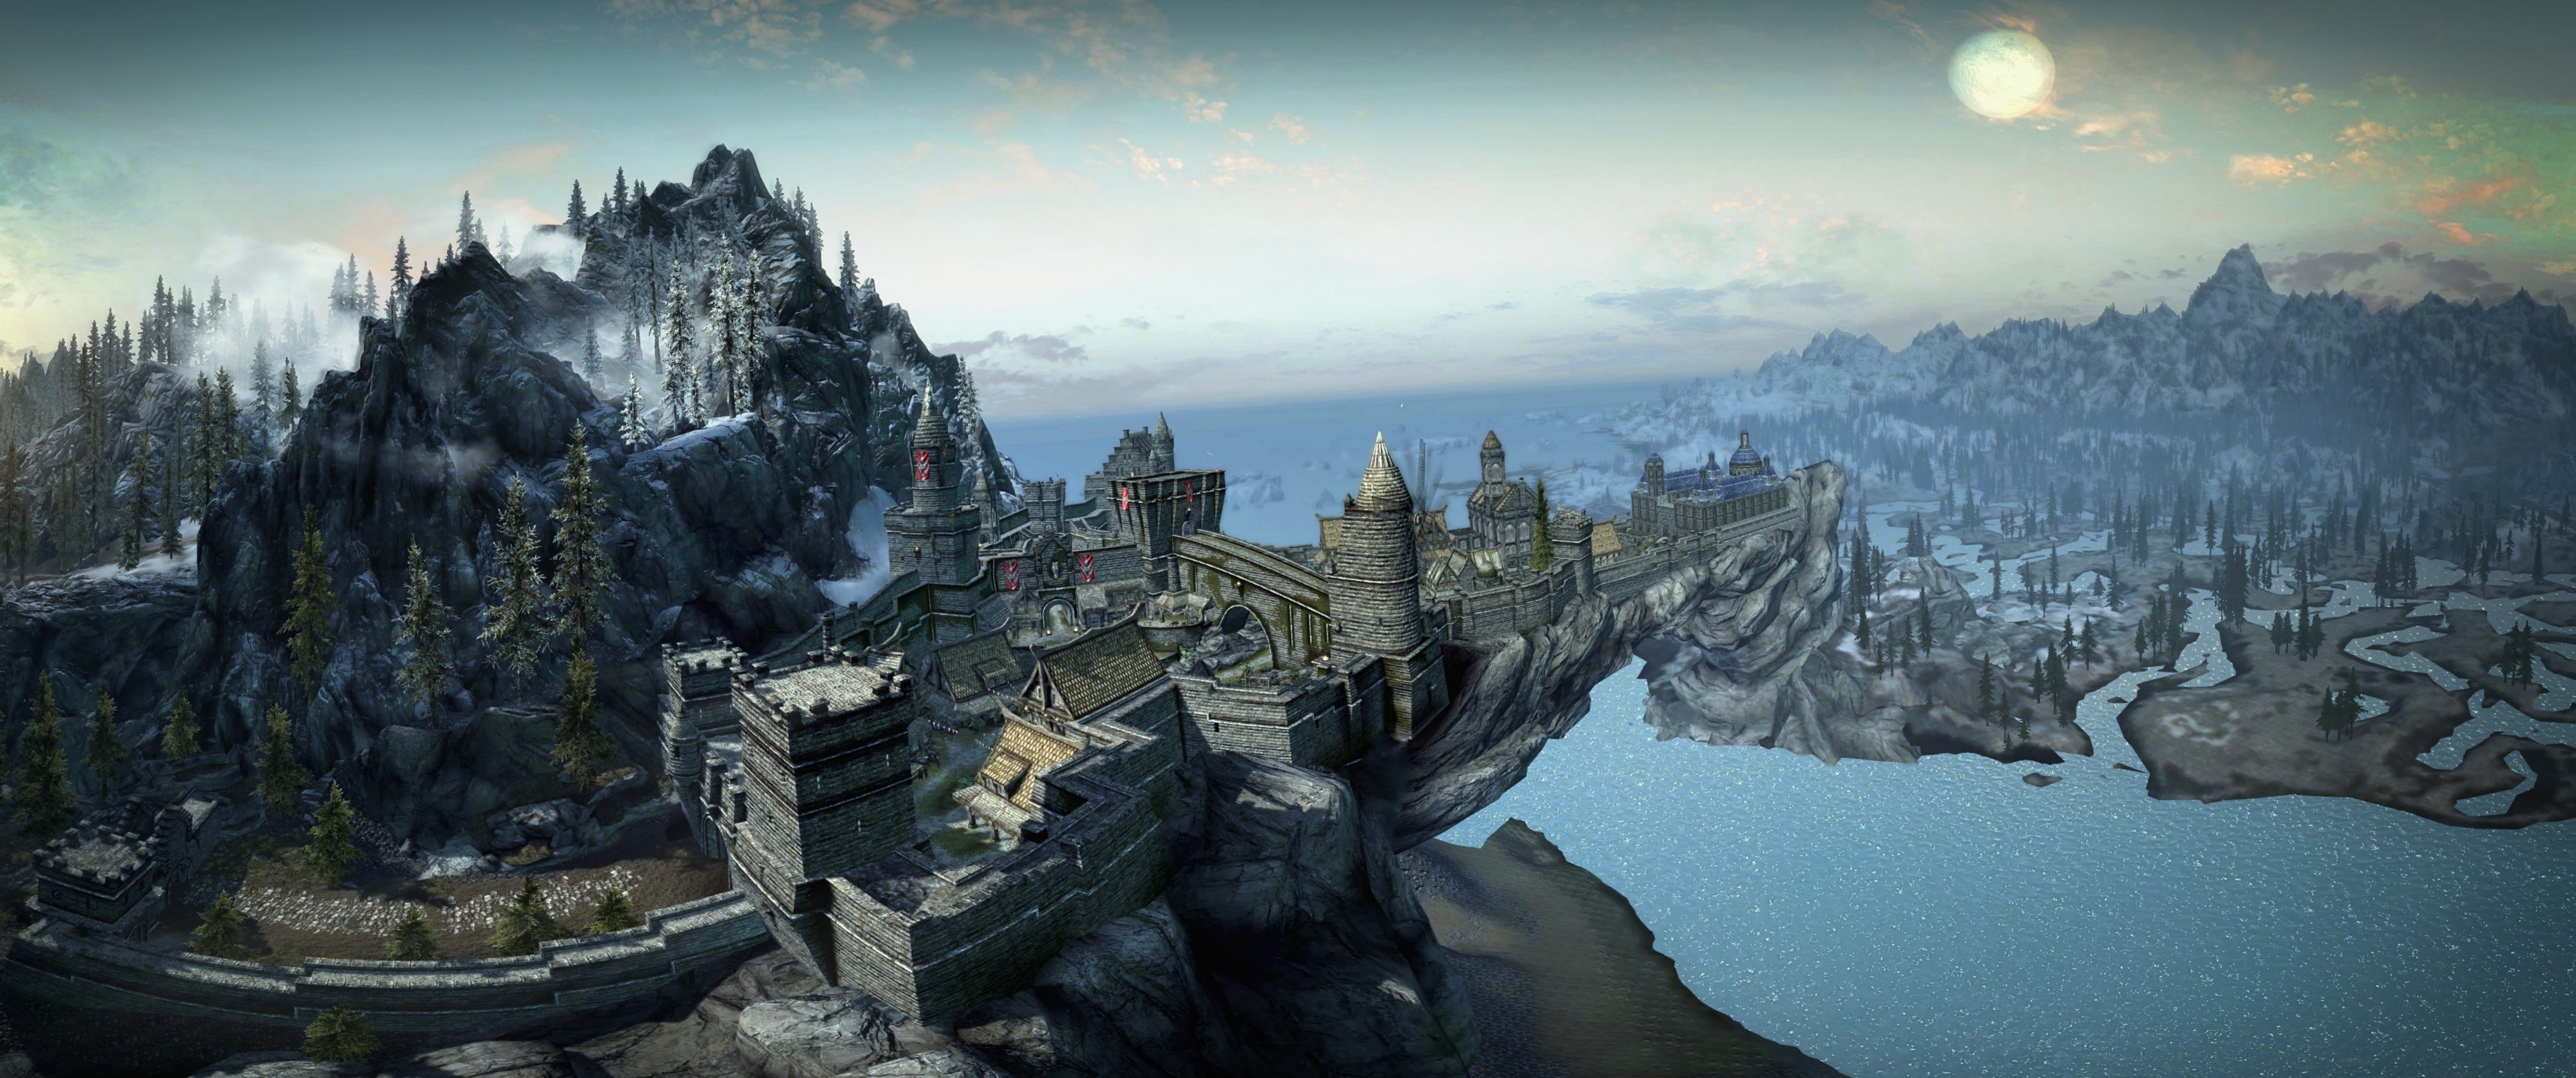 The Elder Scrolls V: Skyrim, video games, castle, mountains, trees